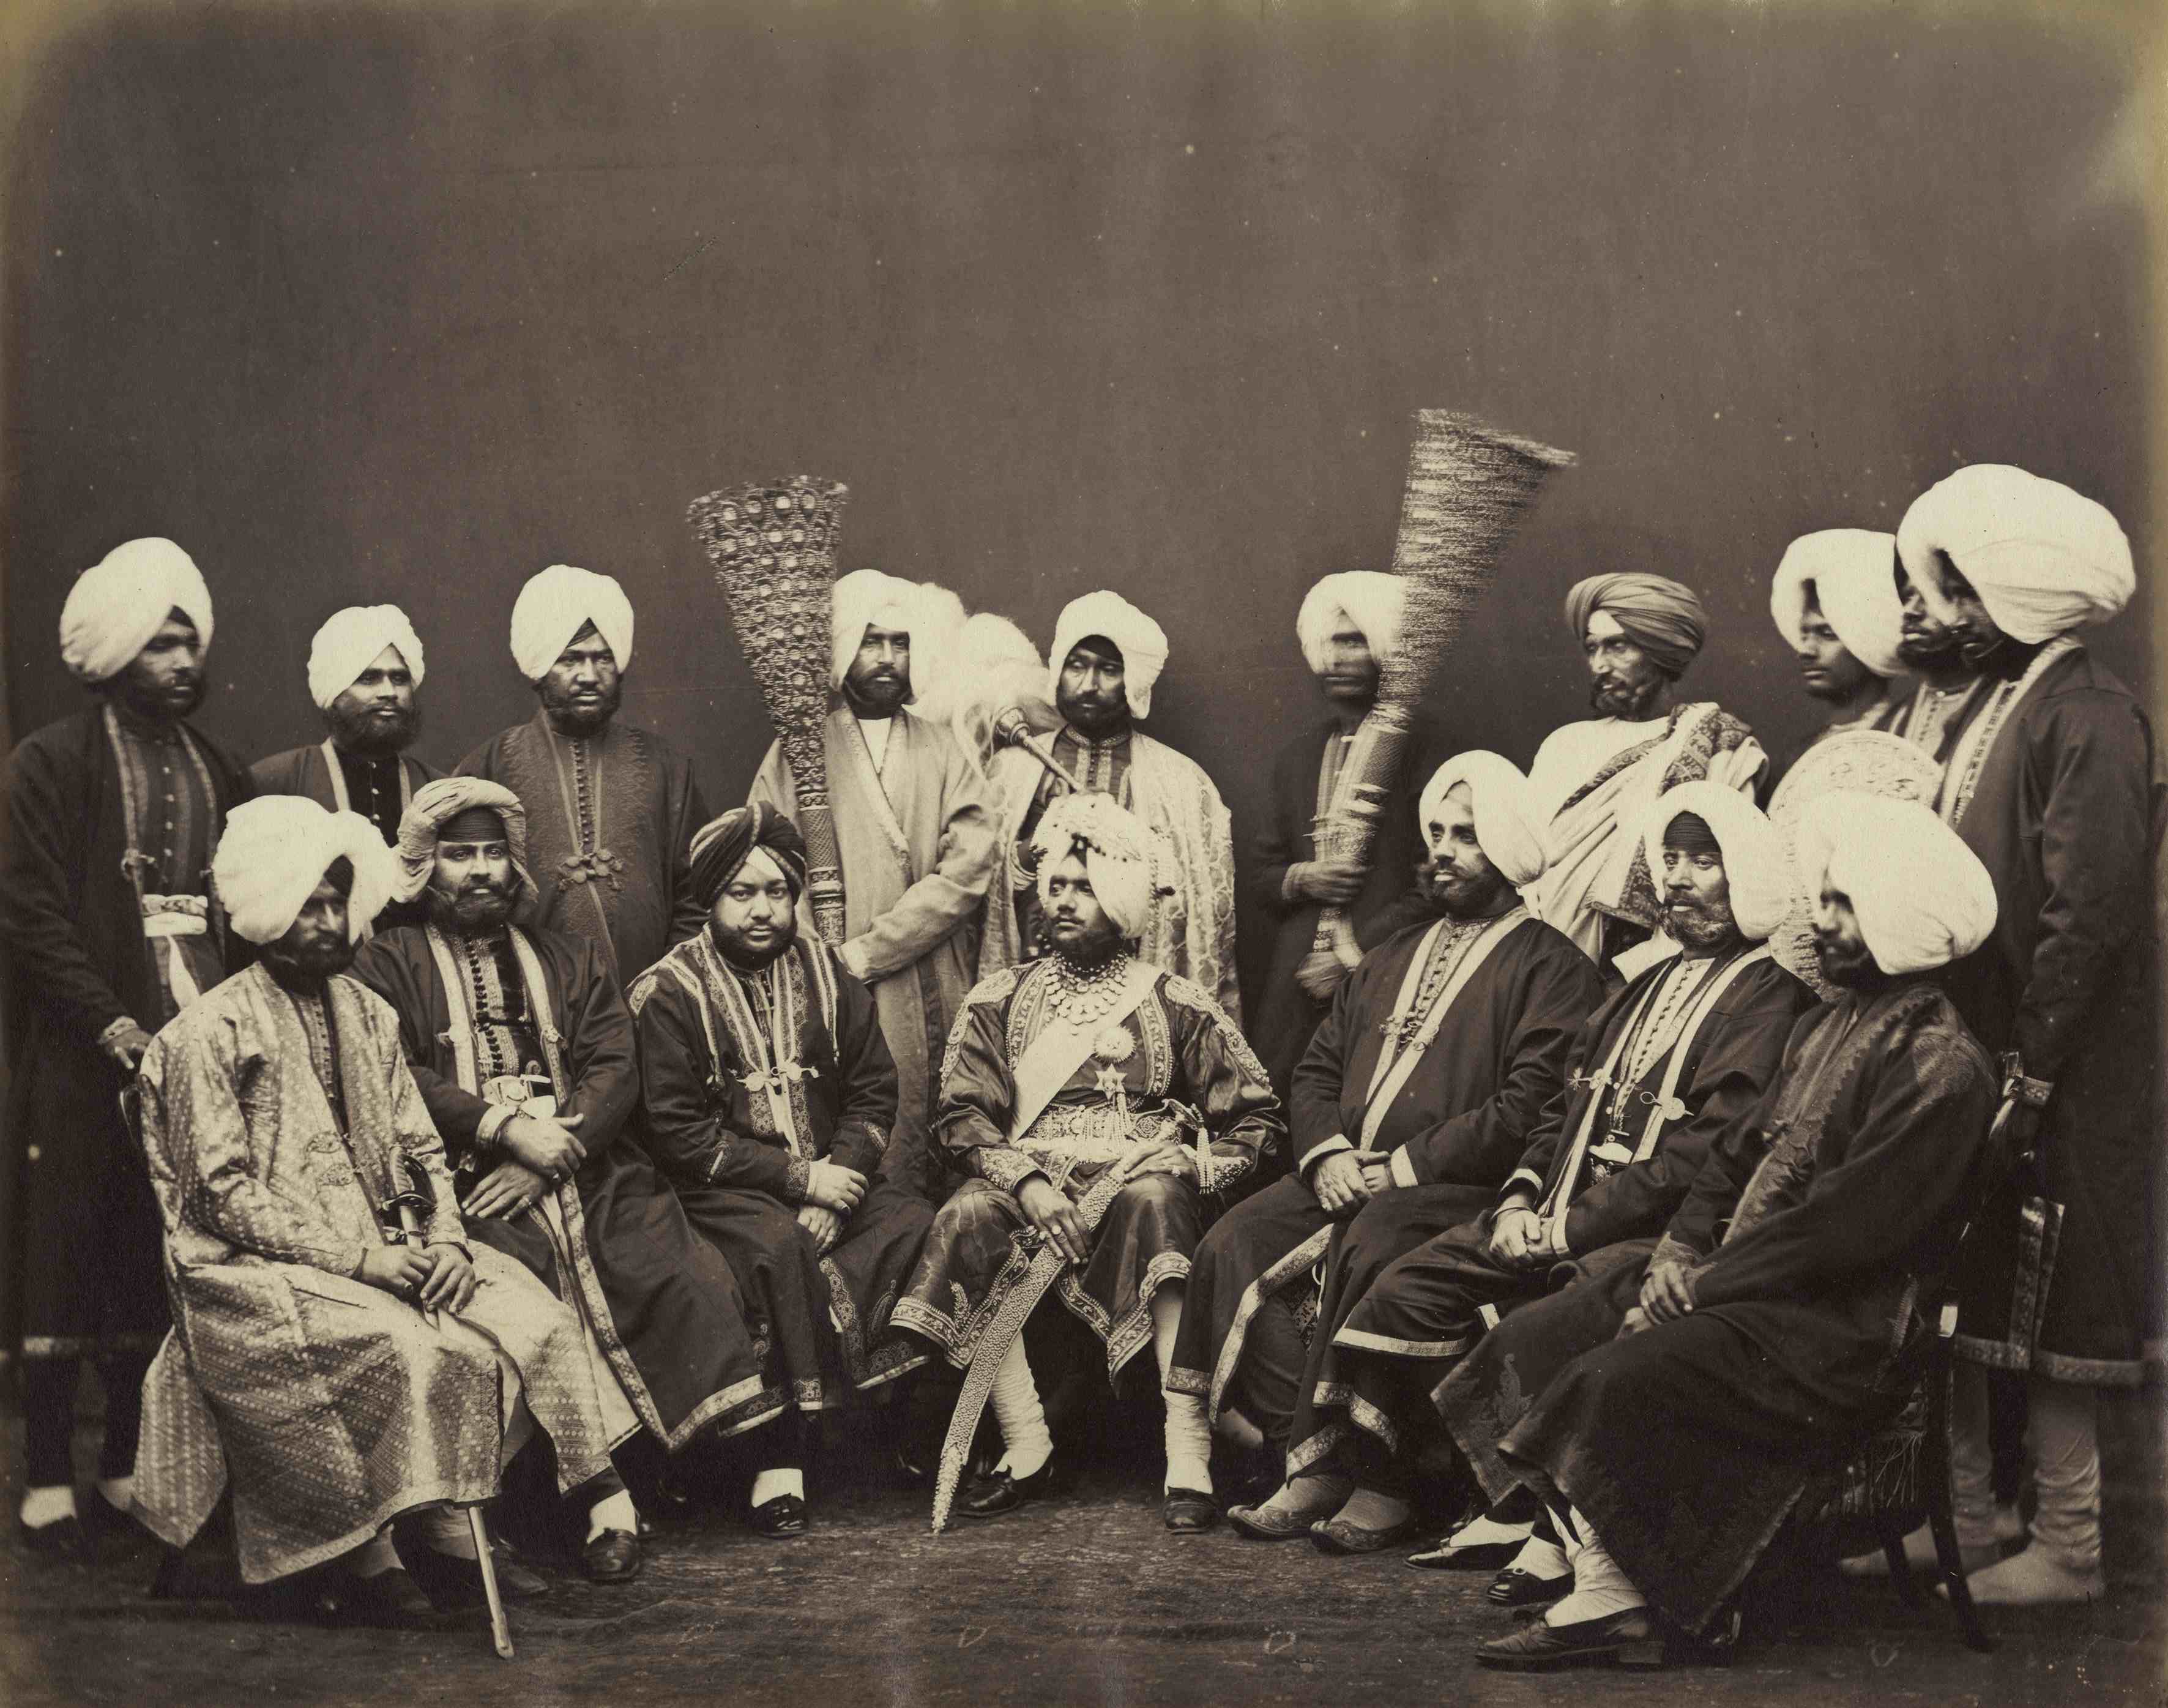 Samuel Bourne, 'Maharaja of Patiala and Attendants', India, 1870s, Albumen print